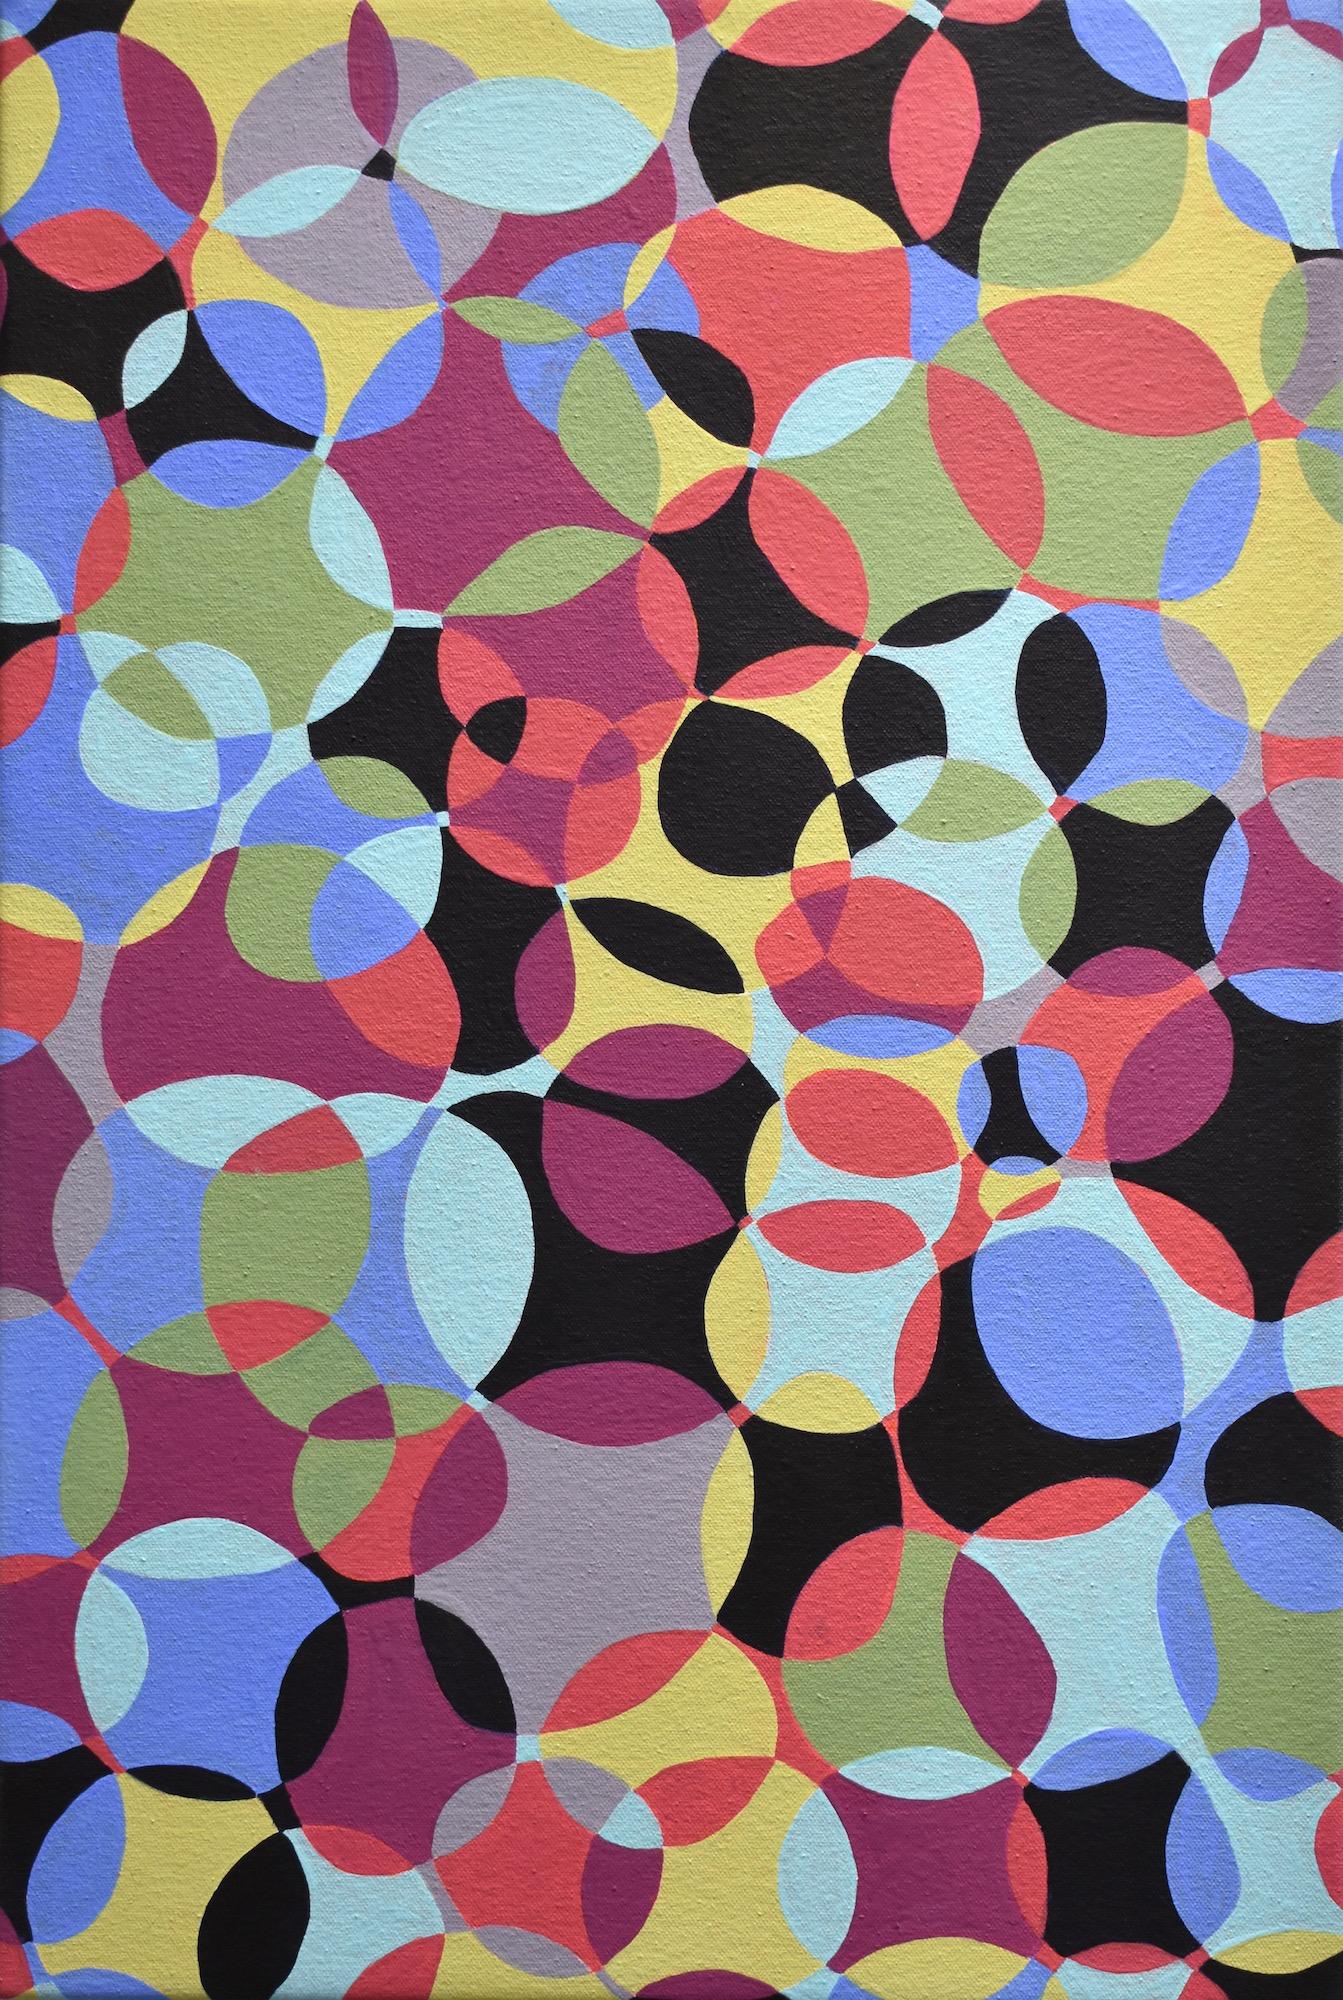 Abstract Painting Denise Driscoll - « Coinship 1 », abstrait, ovales, webs, bulles, bleu, vert, rouge, peinture acrylique